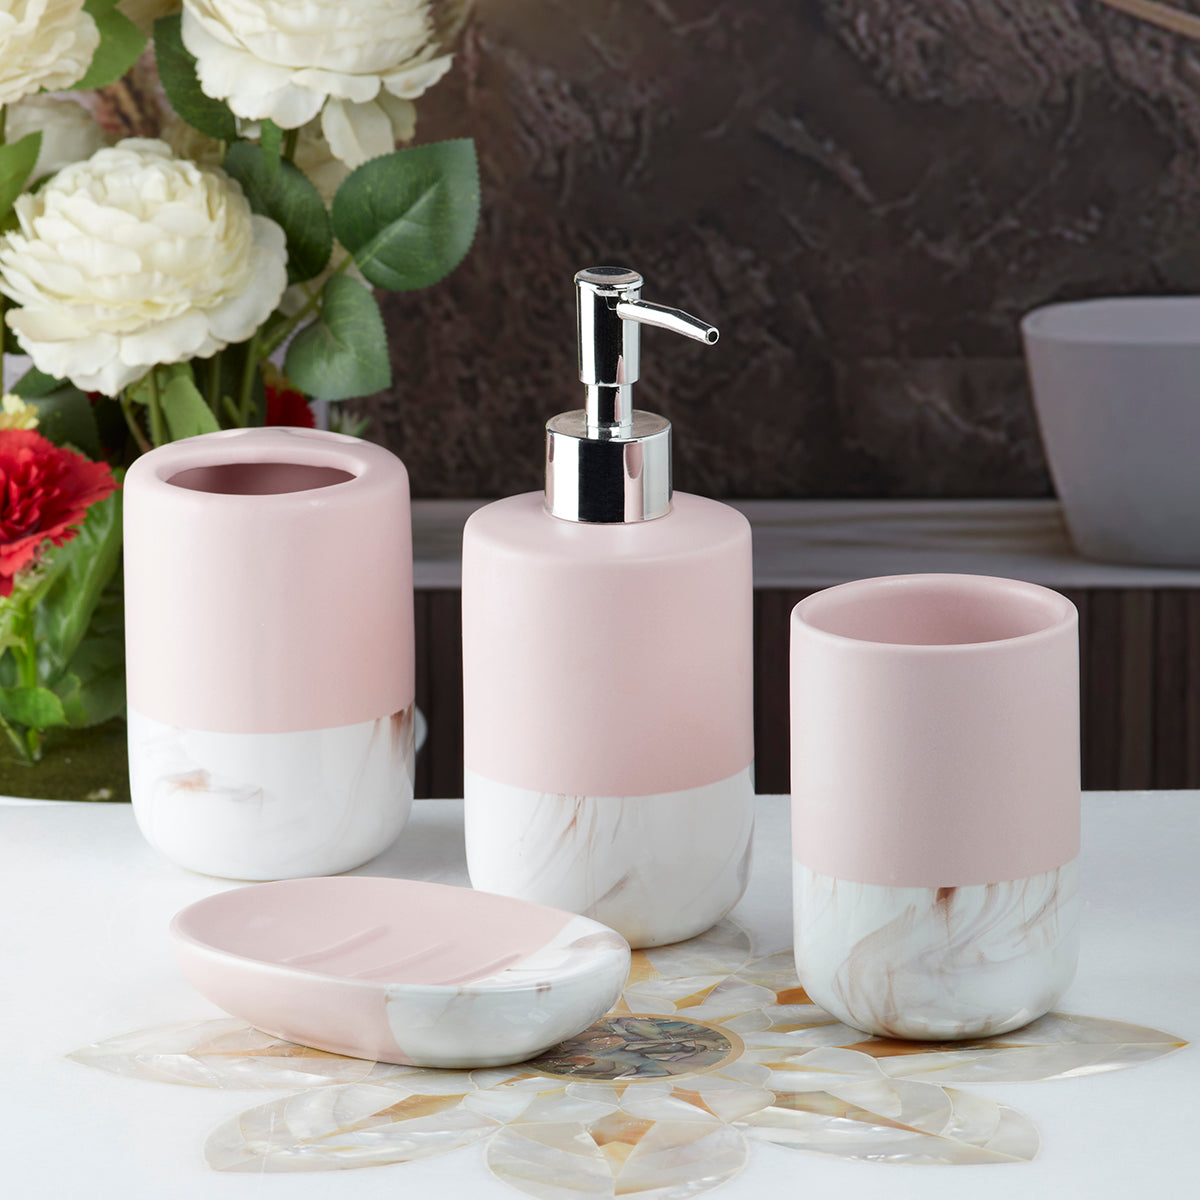 Ceramic Bathroom Accessories Set of 4 Bath Set with Soap Dispenser (9634)